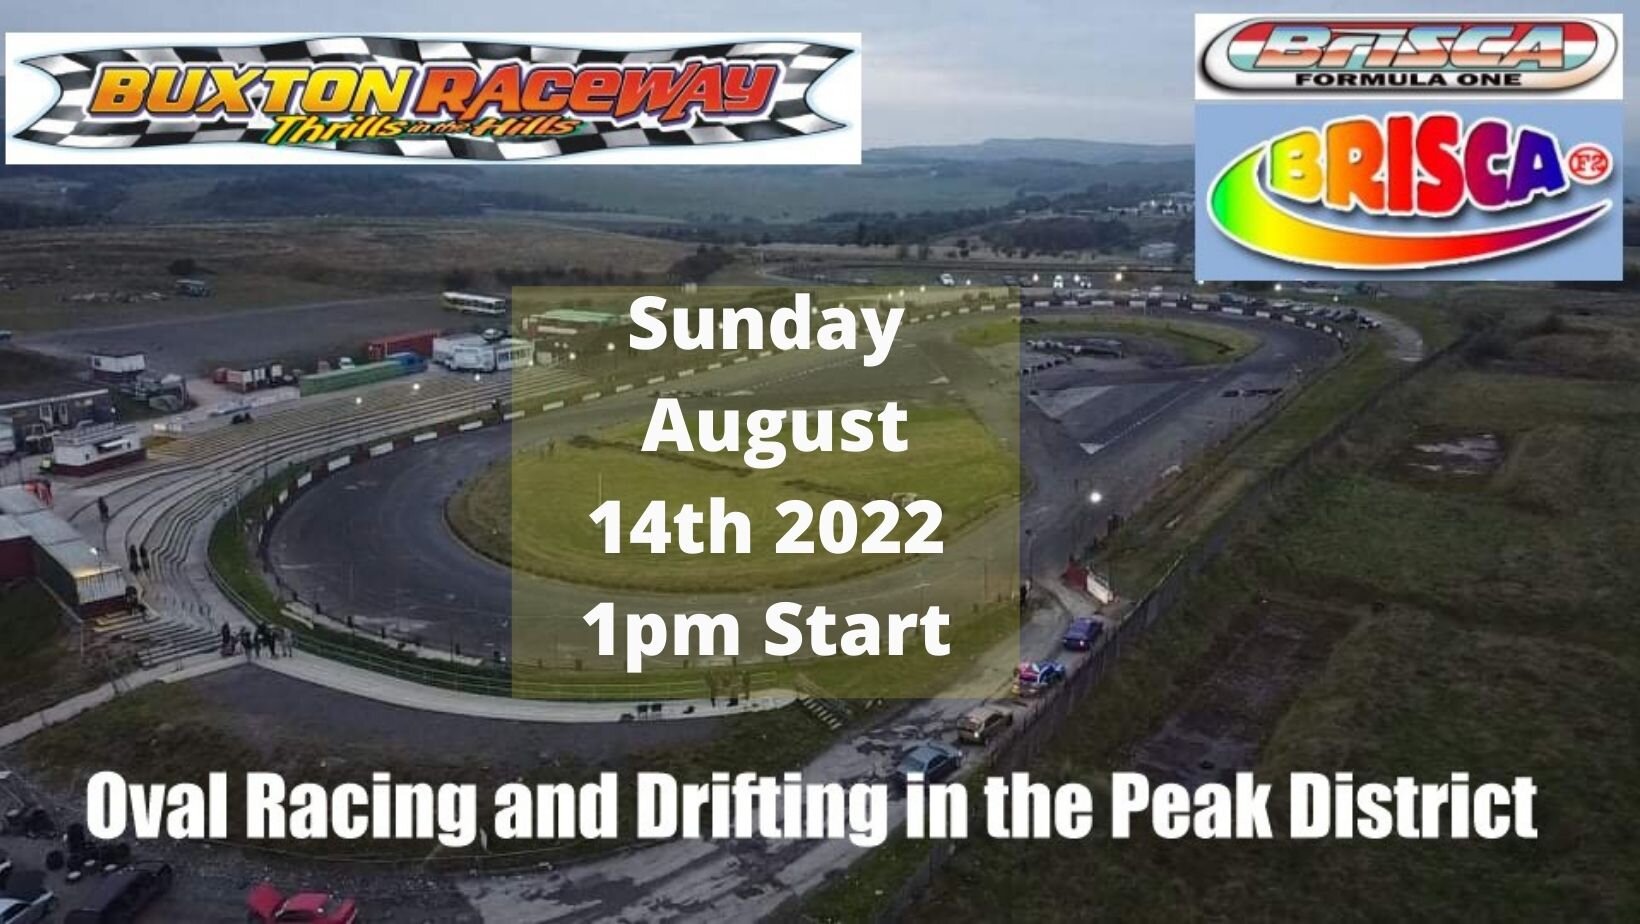 Buxton Raceway | Sunday 14th August 1pm